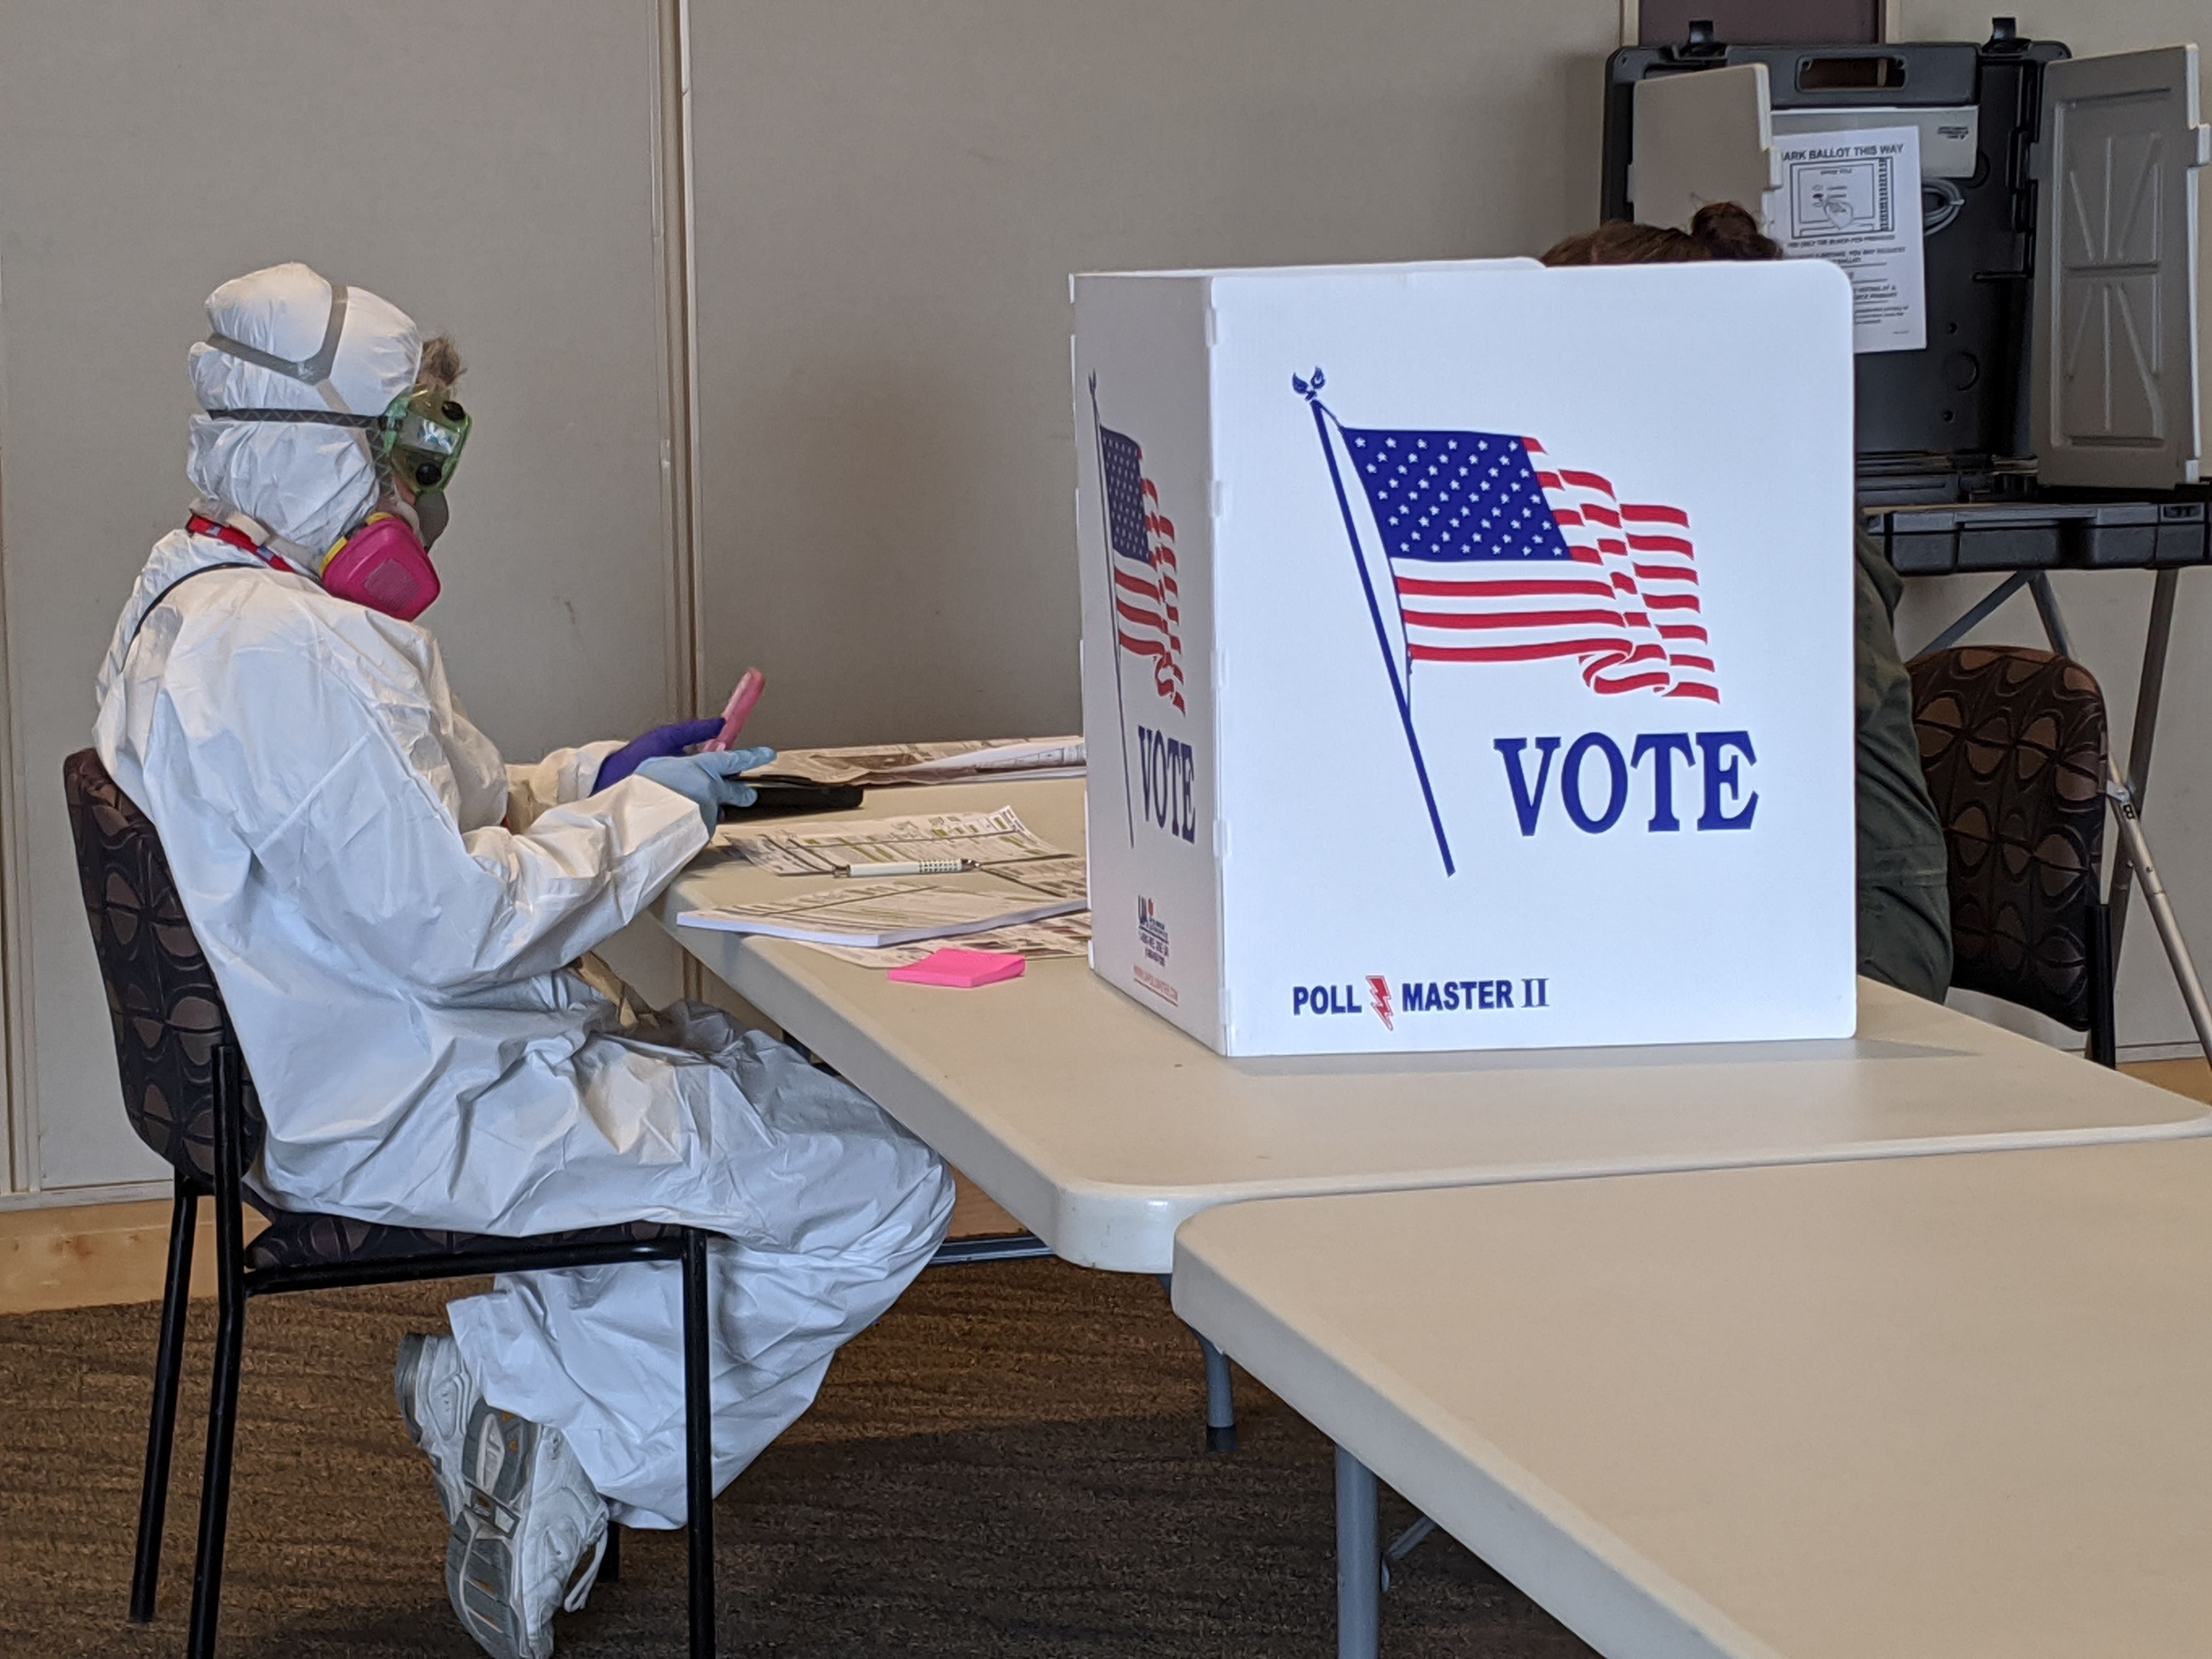 Elections Chief Inspector Mary Magdalen Moser runs a polling location in Kenosha, Wisconsin, in full hazmat gear. (DEREK R. HENKLE/AFP via Getty Images)